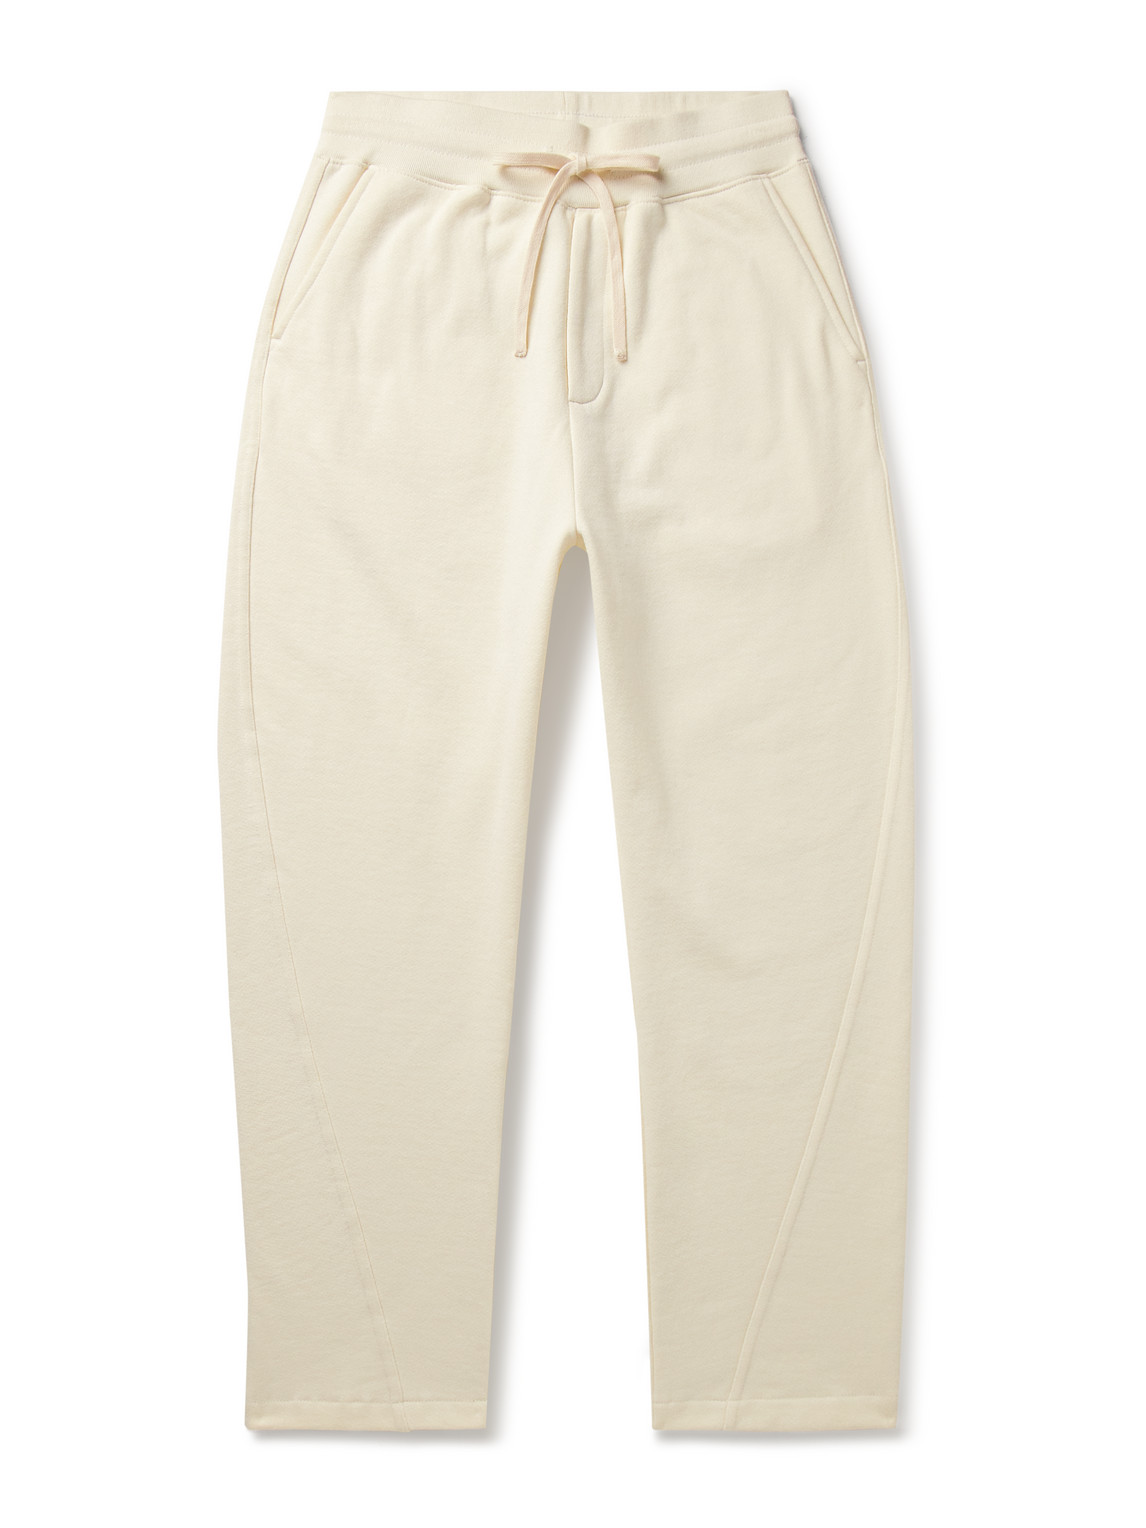 John Elliott - Studio Fleece Sendai Slim-Fit Cotton-Jersey Sweatpants - Men - Neutrals - M von John Elliott